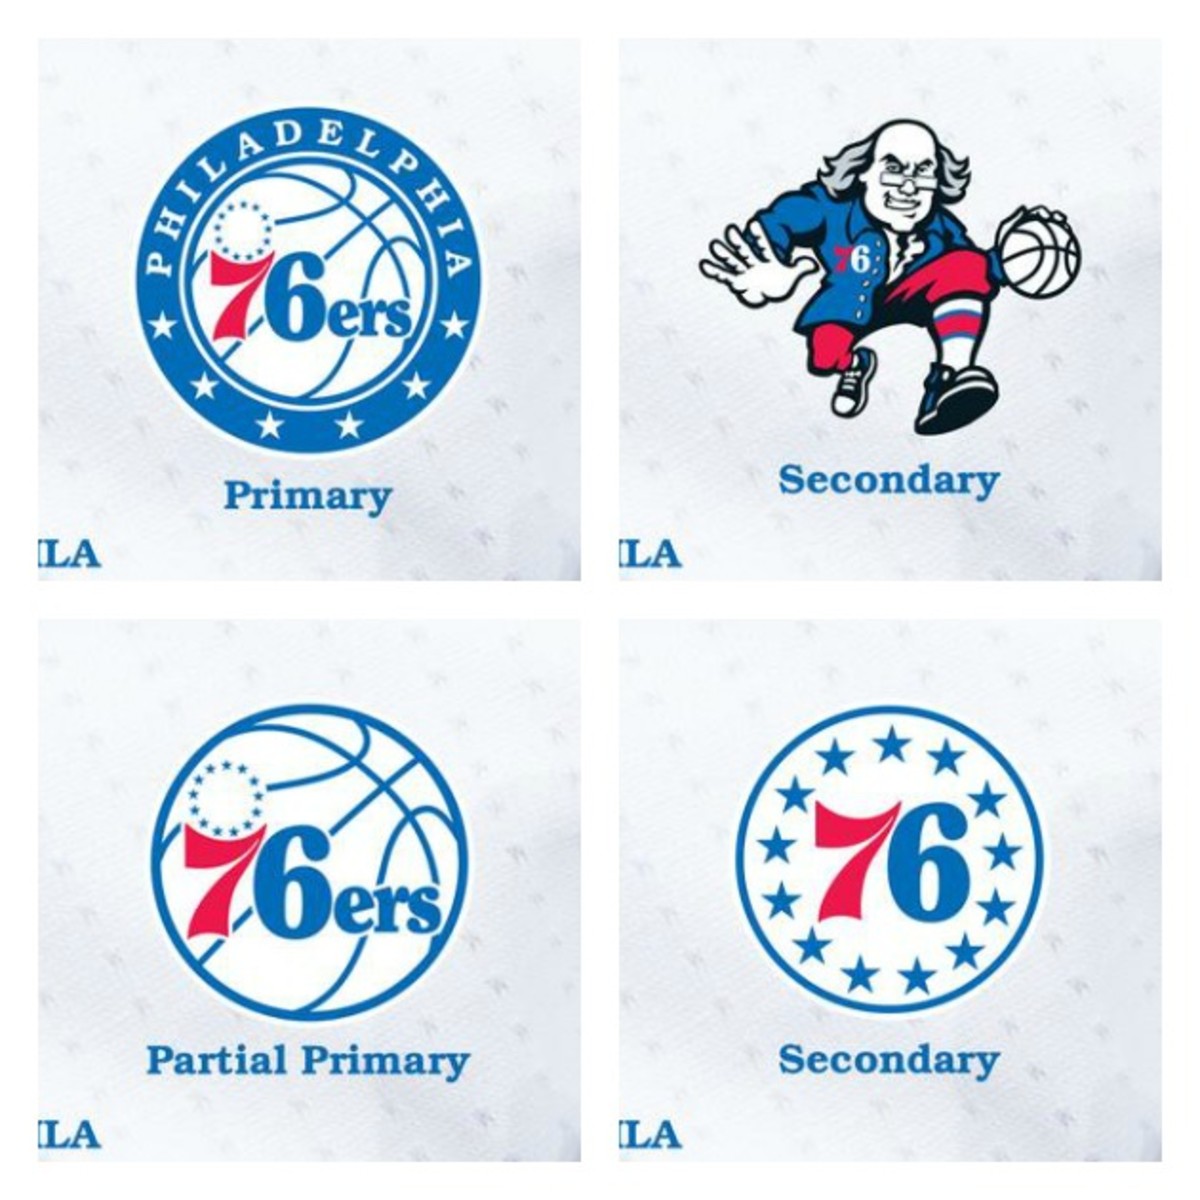 phildelphia-76ers-logo-collage.jpg